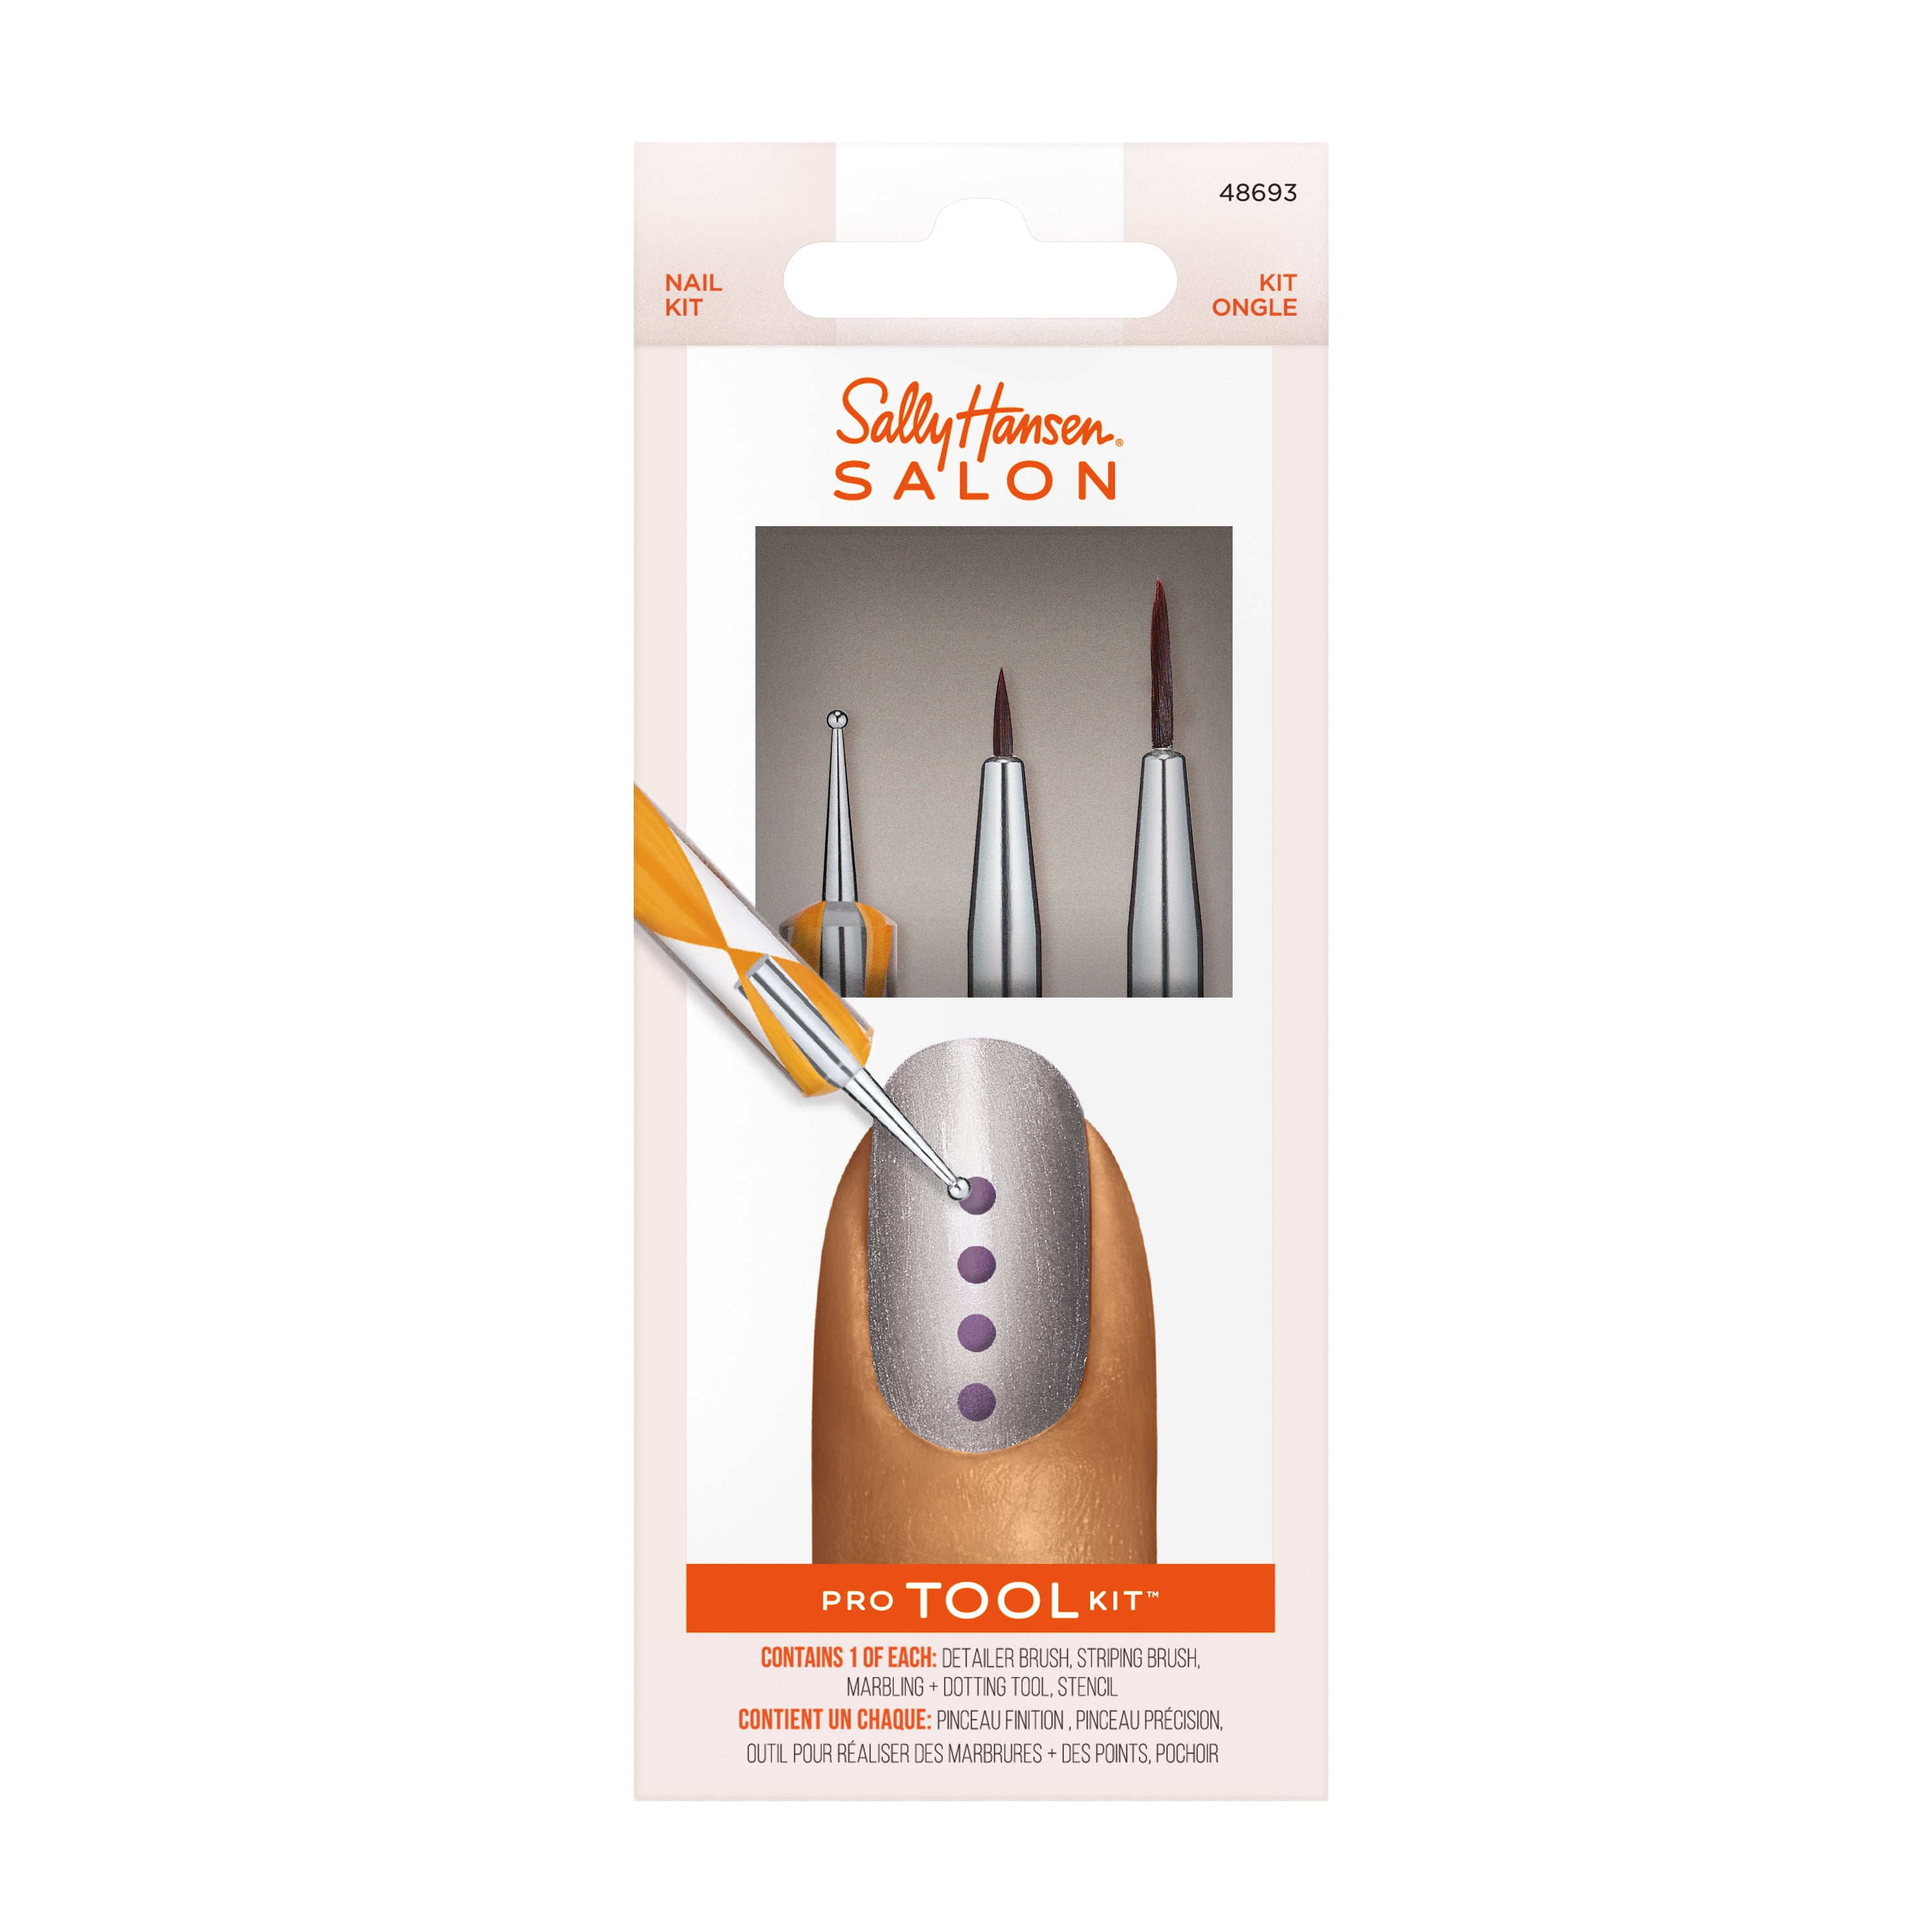 Sally Hansen Nail Salon Pro Tool Kit, 0.32 oz, Nail Art Tools, Nail Dotting Tool, Easy to Use, Detailer Brush, Stripping Brush, Marbling and Dotting Tool